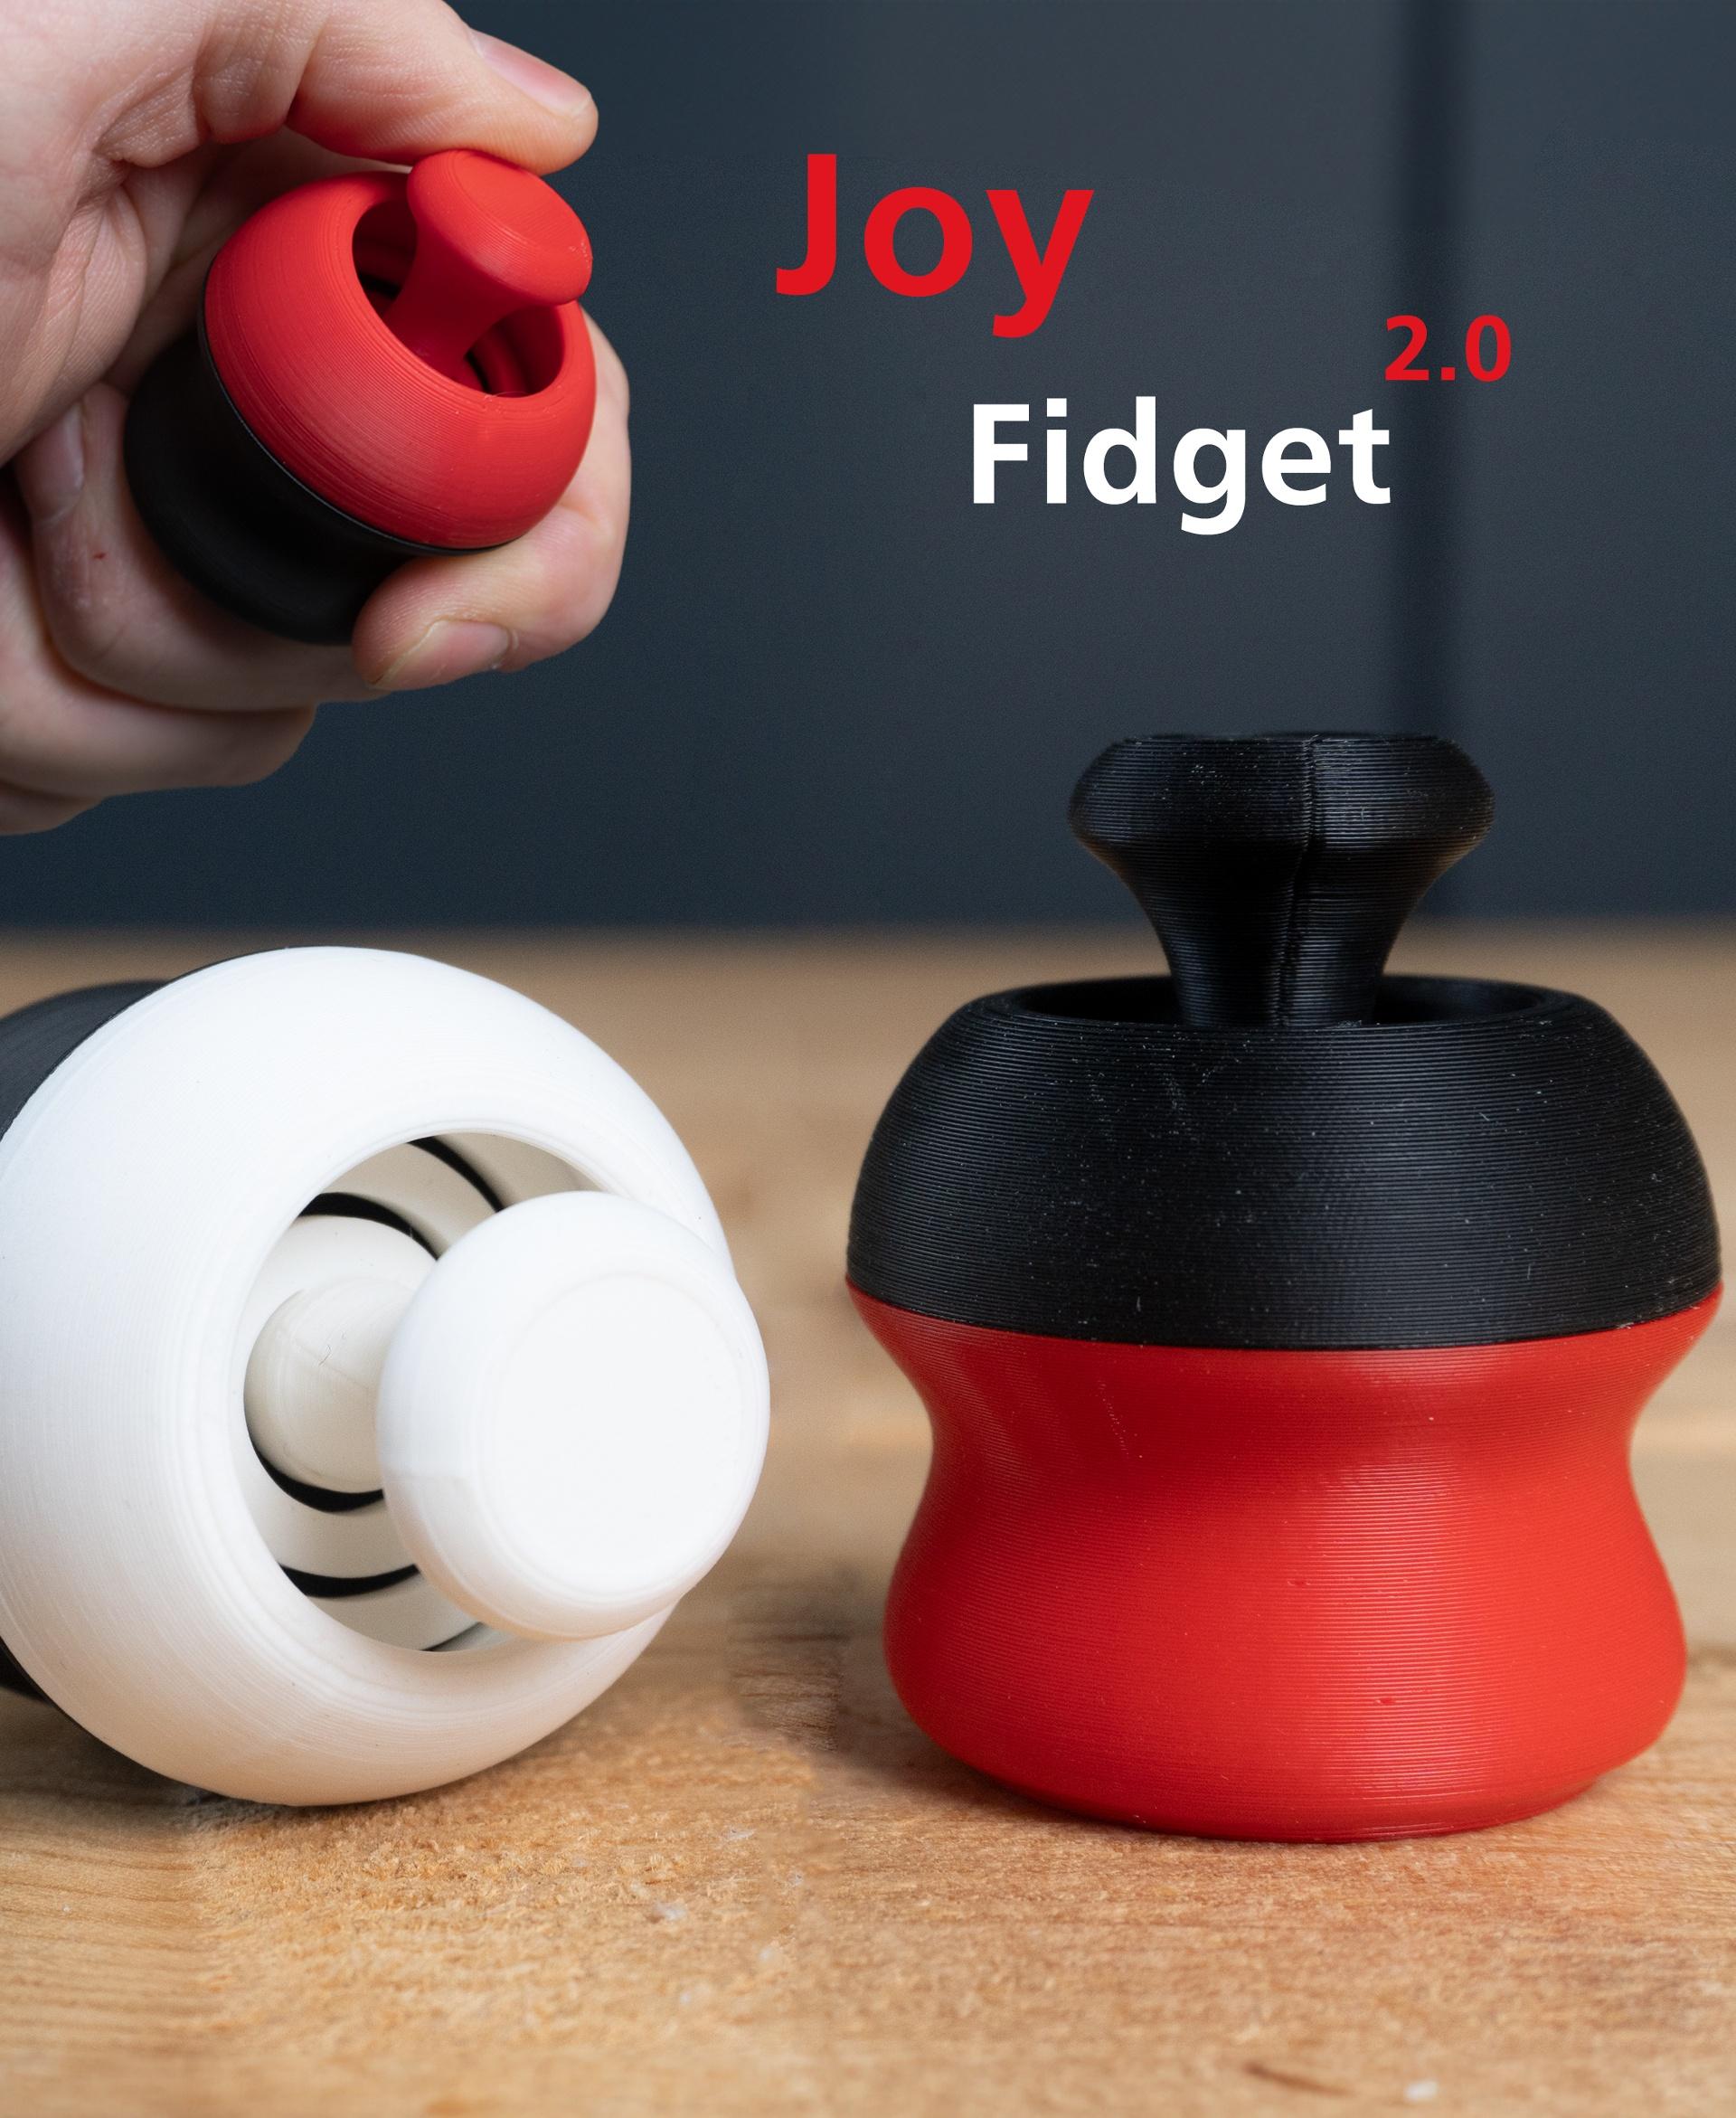 Joy Fidget 2.0 3d model